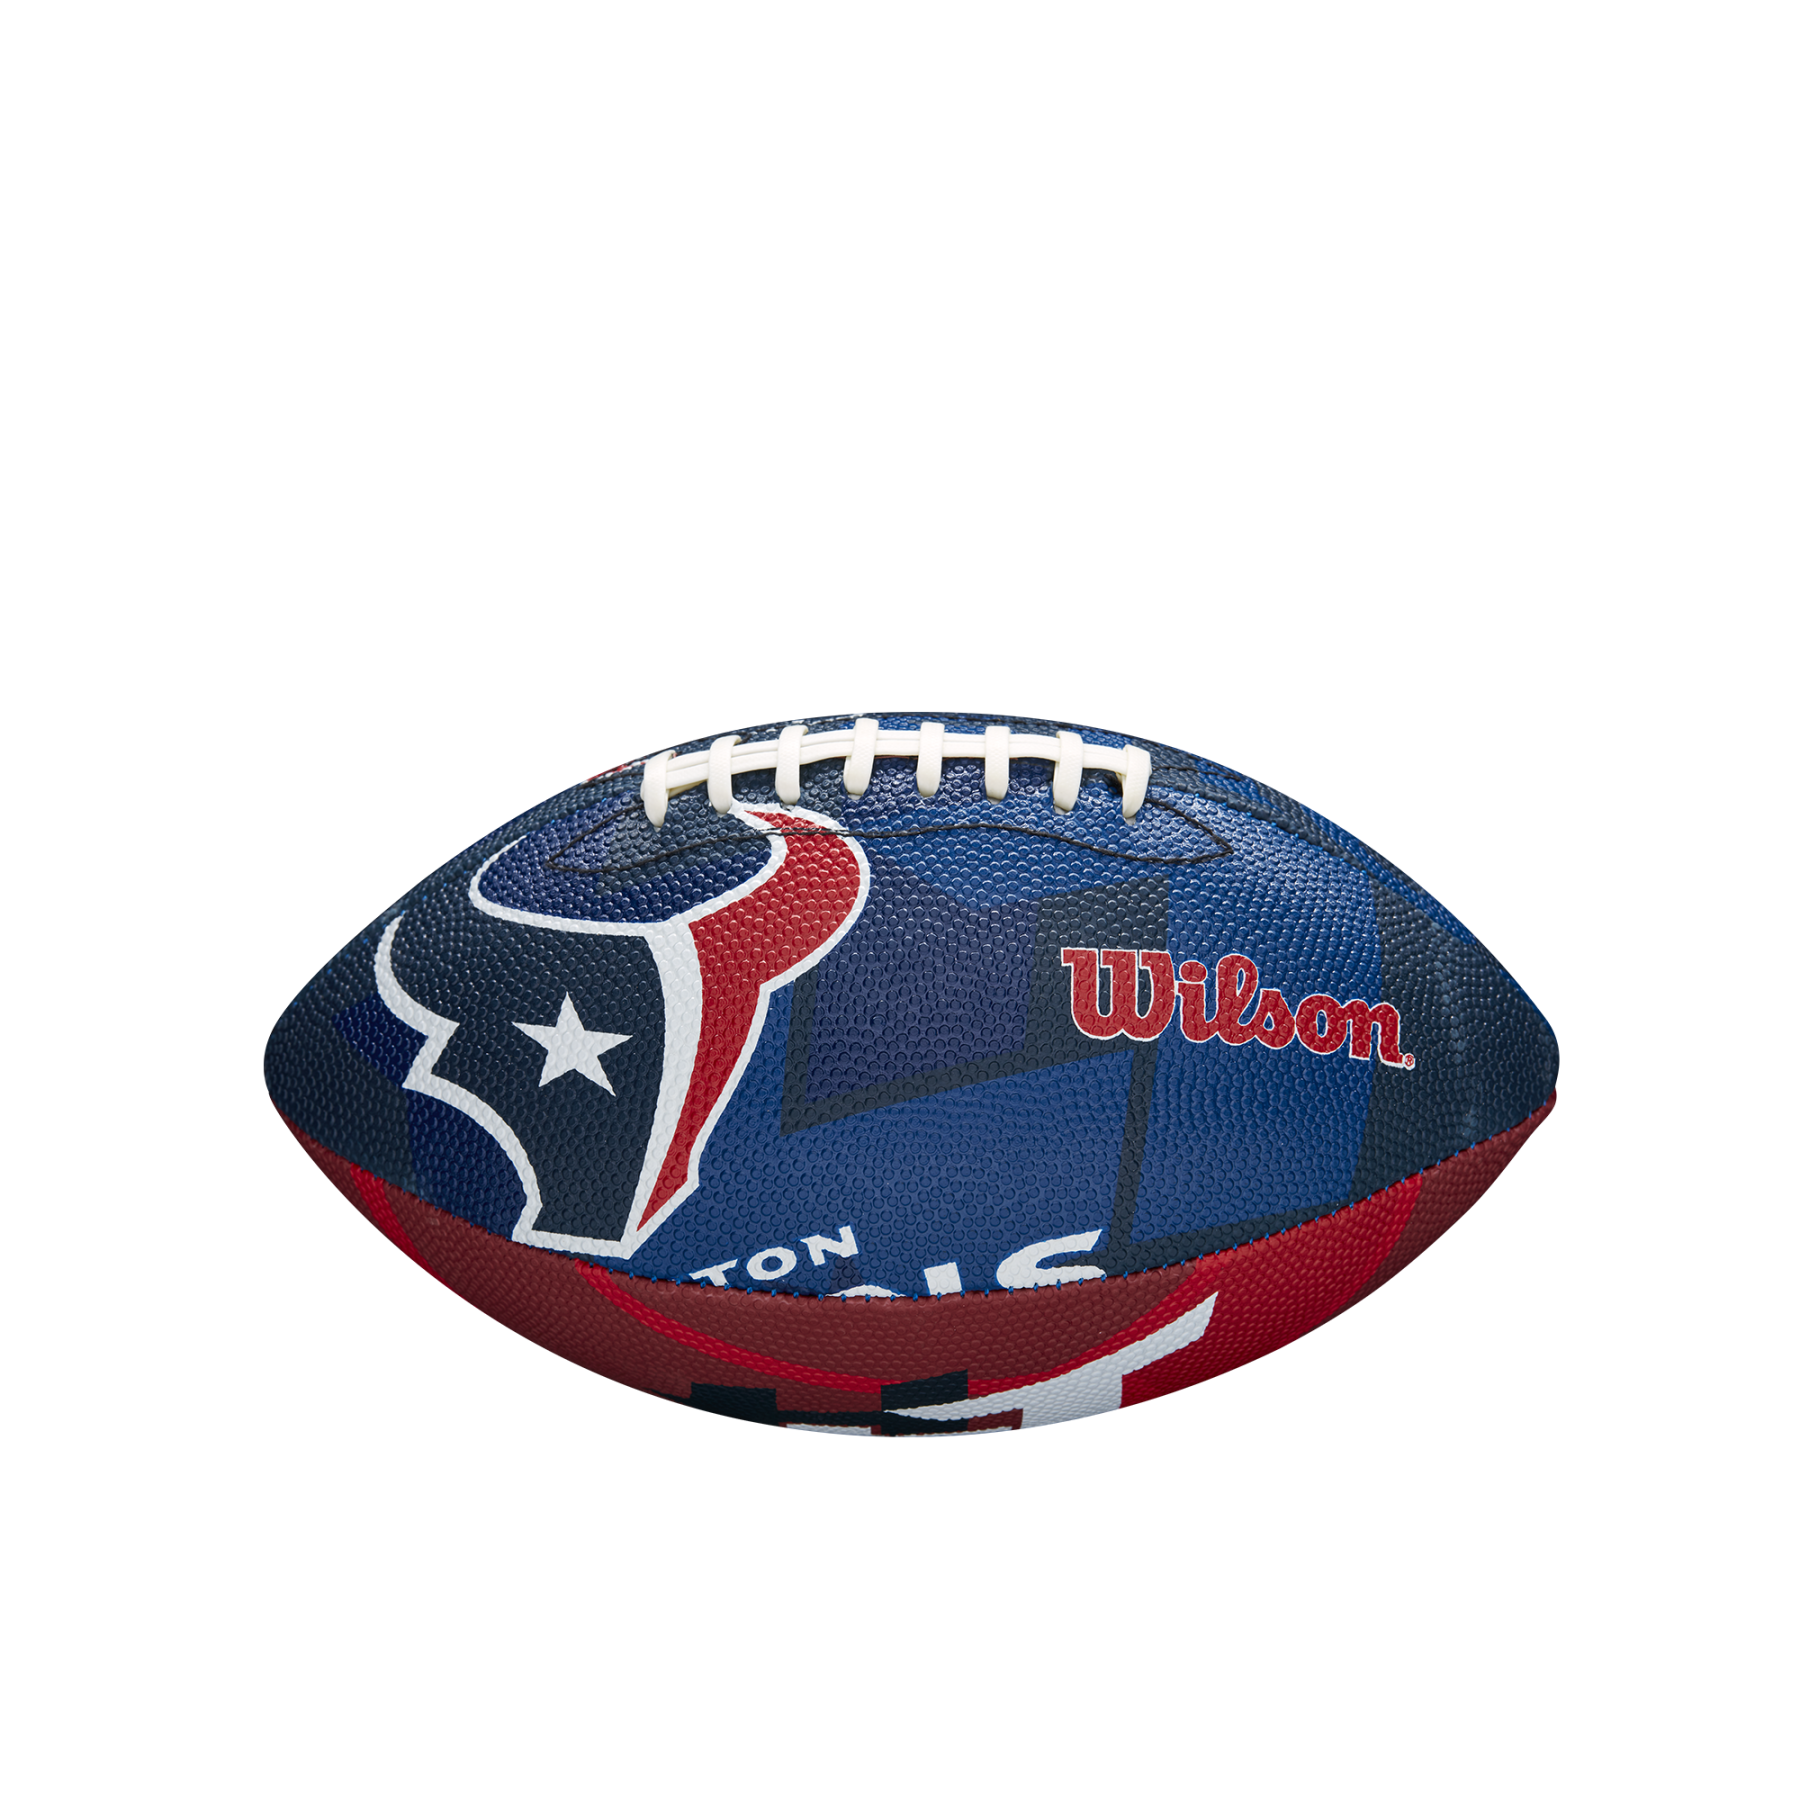 Children's ball Wilson Texans NFL Logo